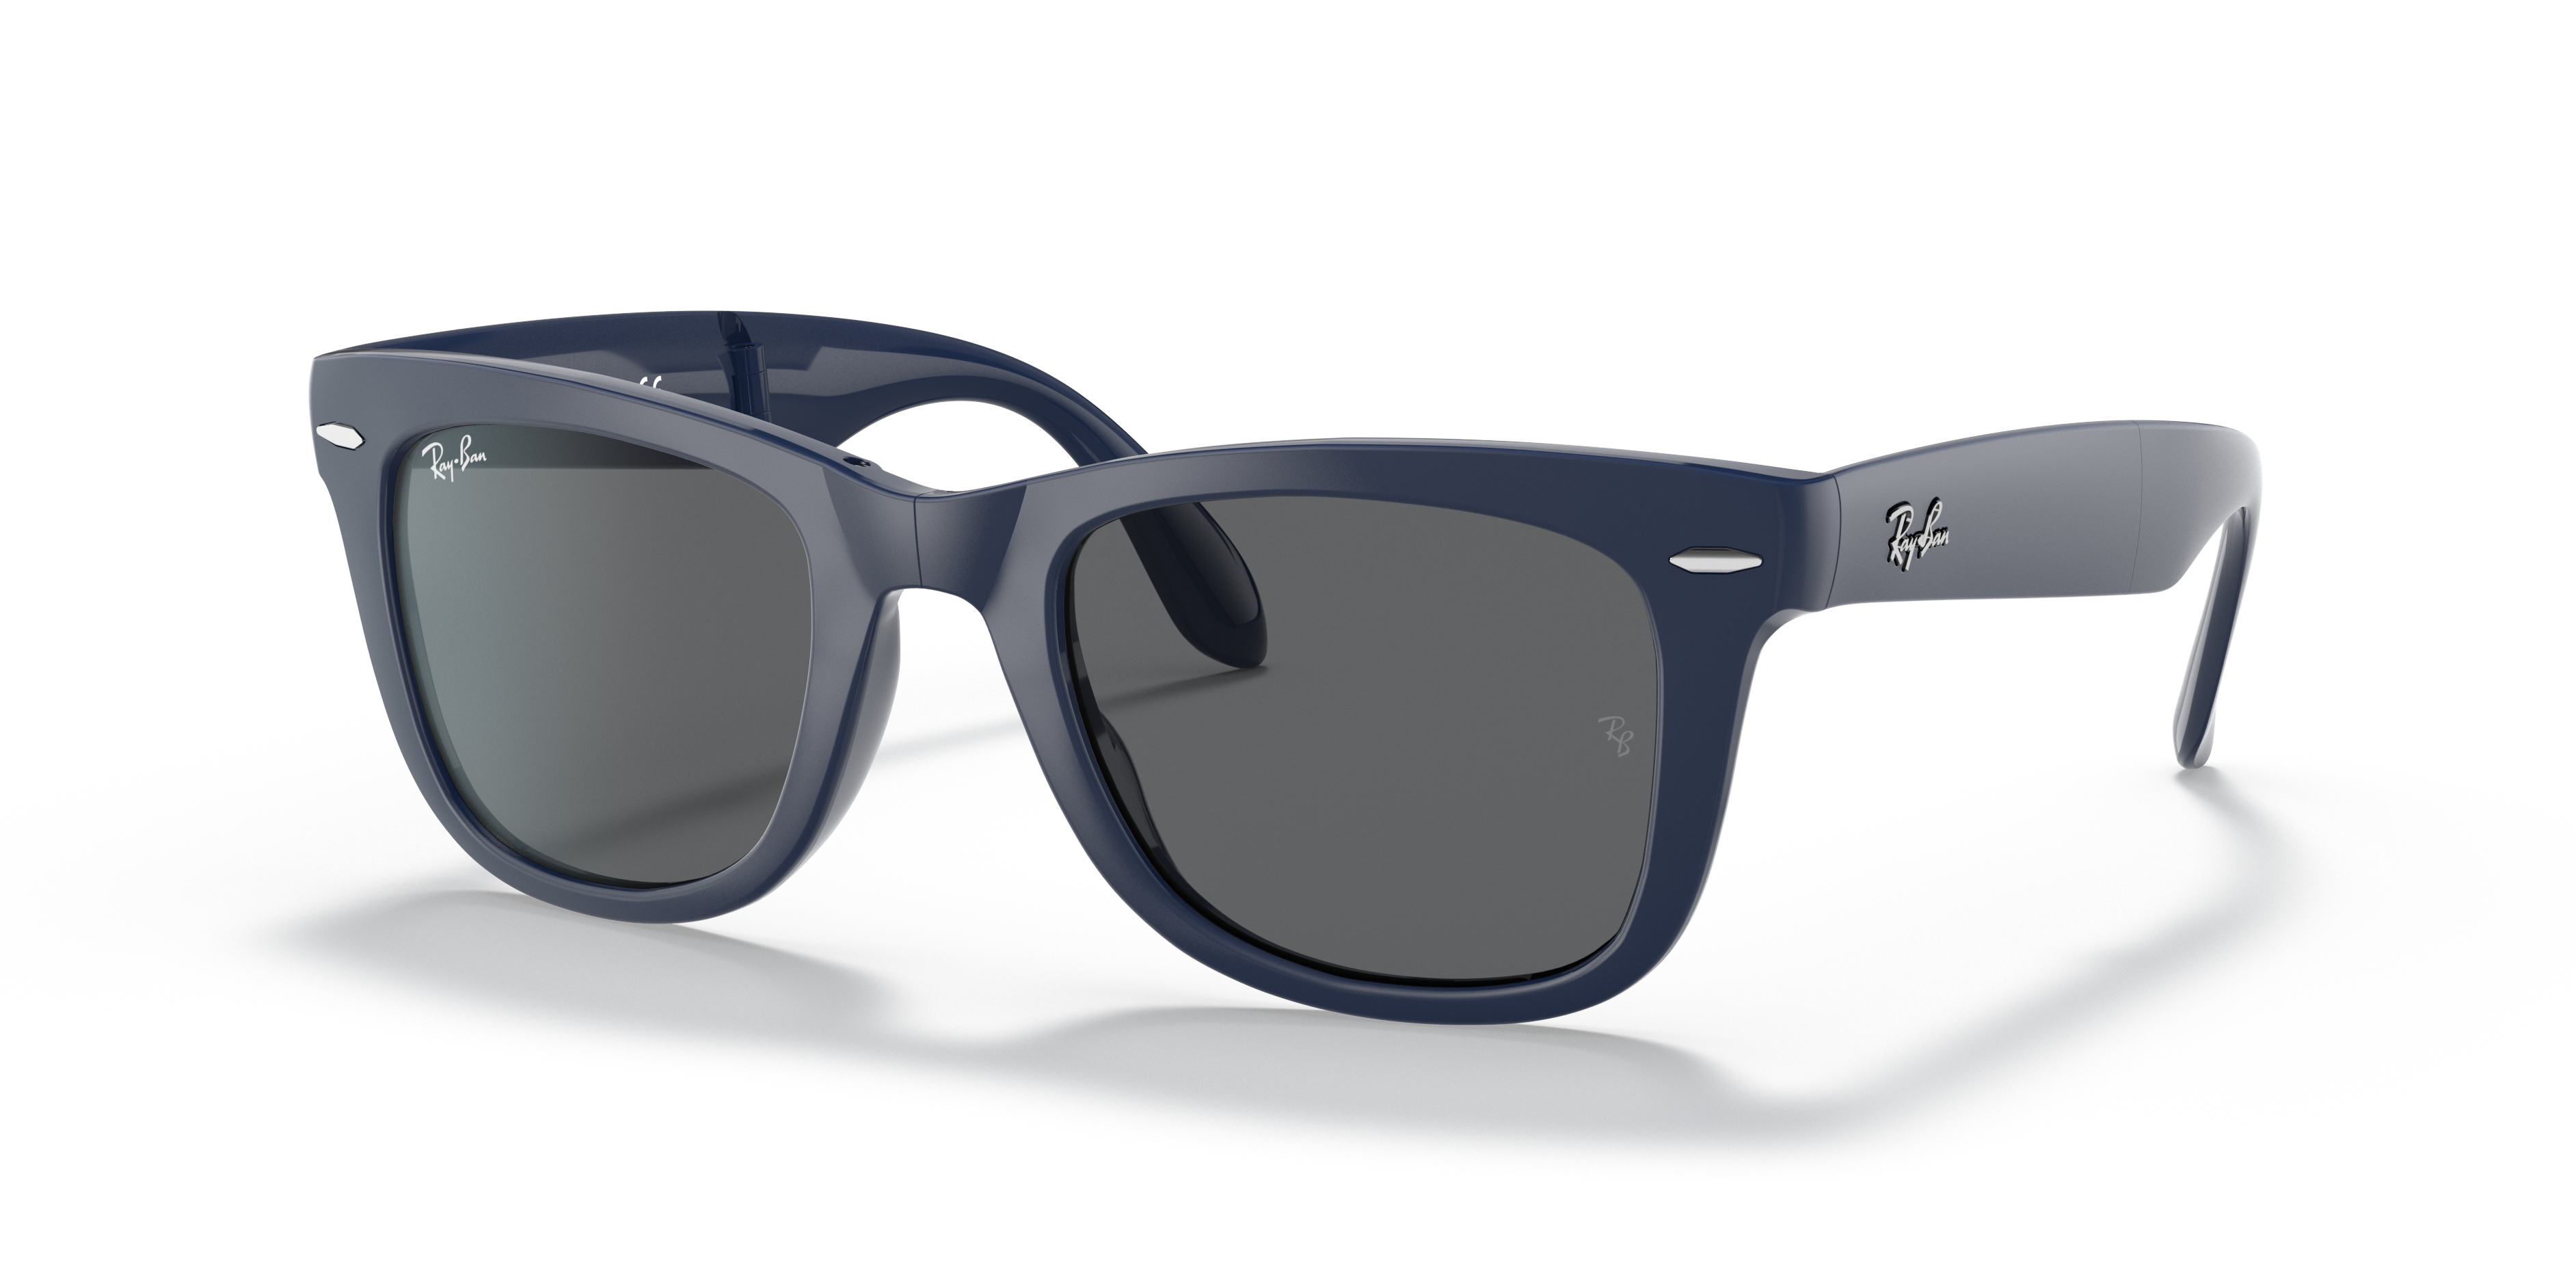 Wayfarer Folding Classic Sunglasses in Blue and Dark Grey | Ray-Ban®